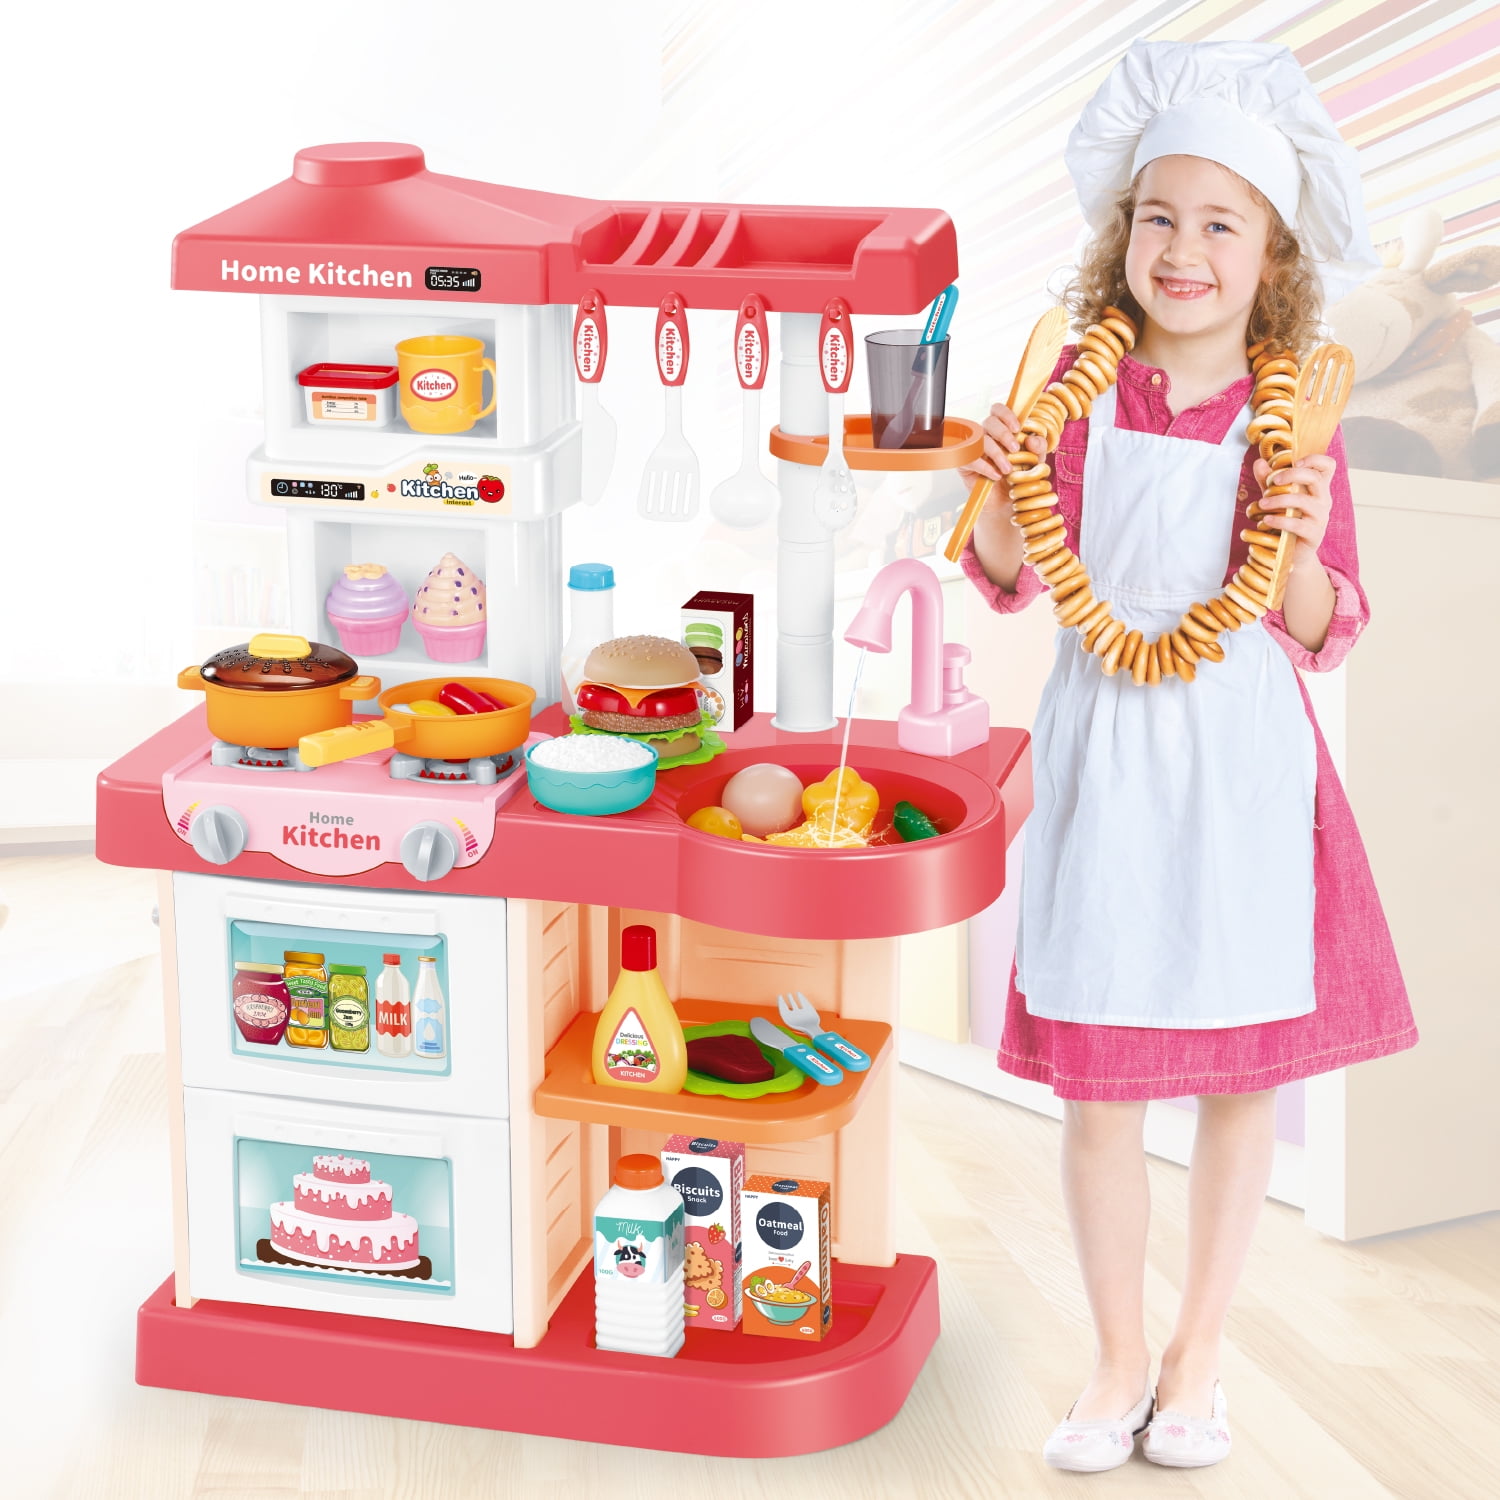 Disney princess kitchen play set - Toy Kitchens & Food - Scarsdale, New  York, Facebook Marketplace